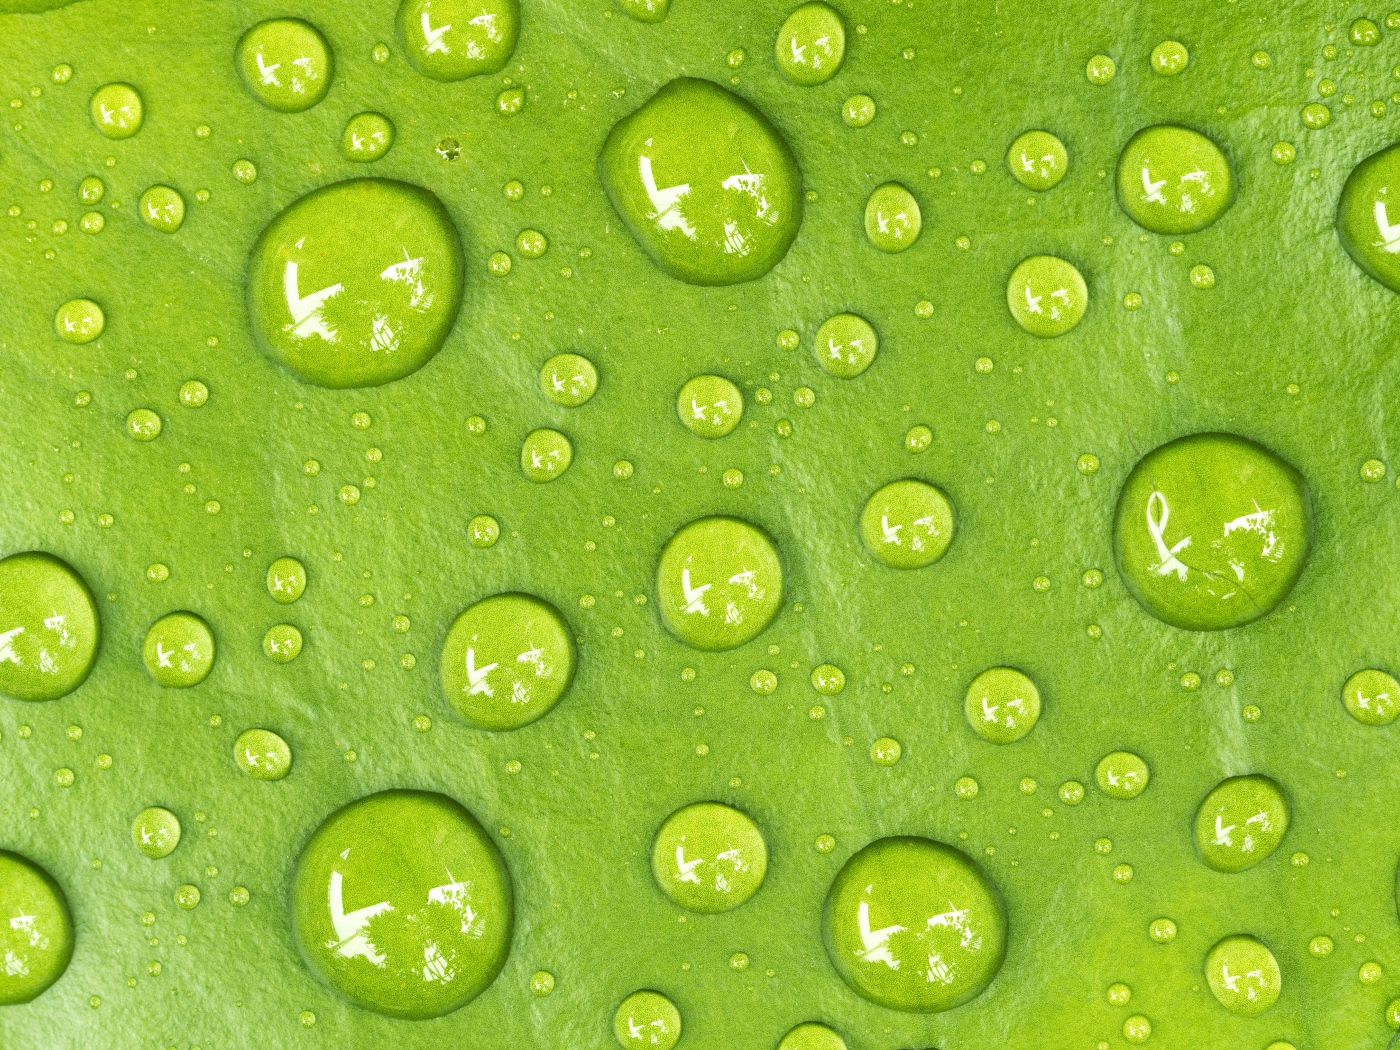 Drops on a green leaf close up